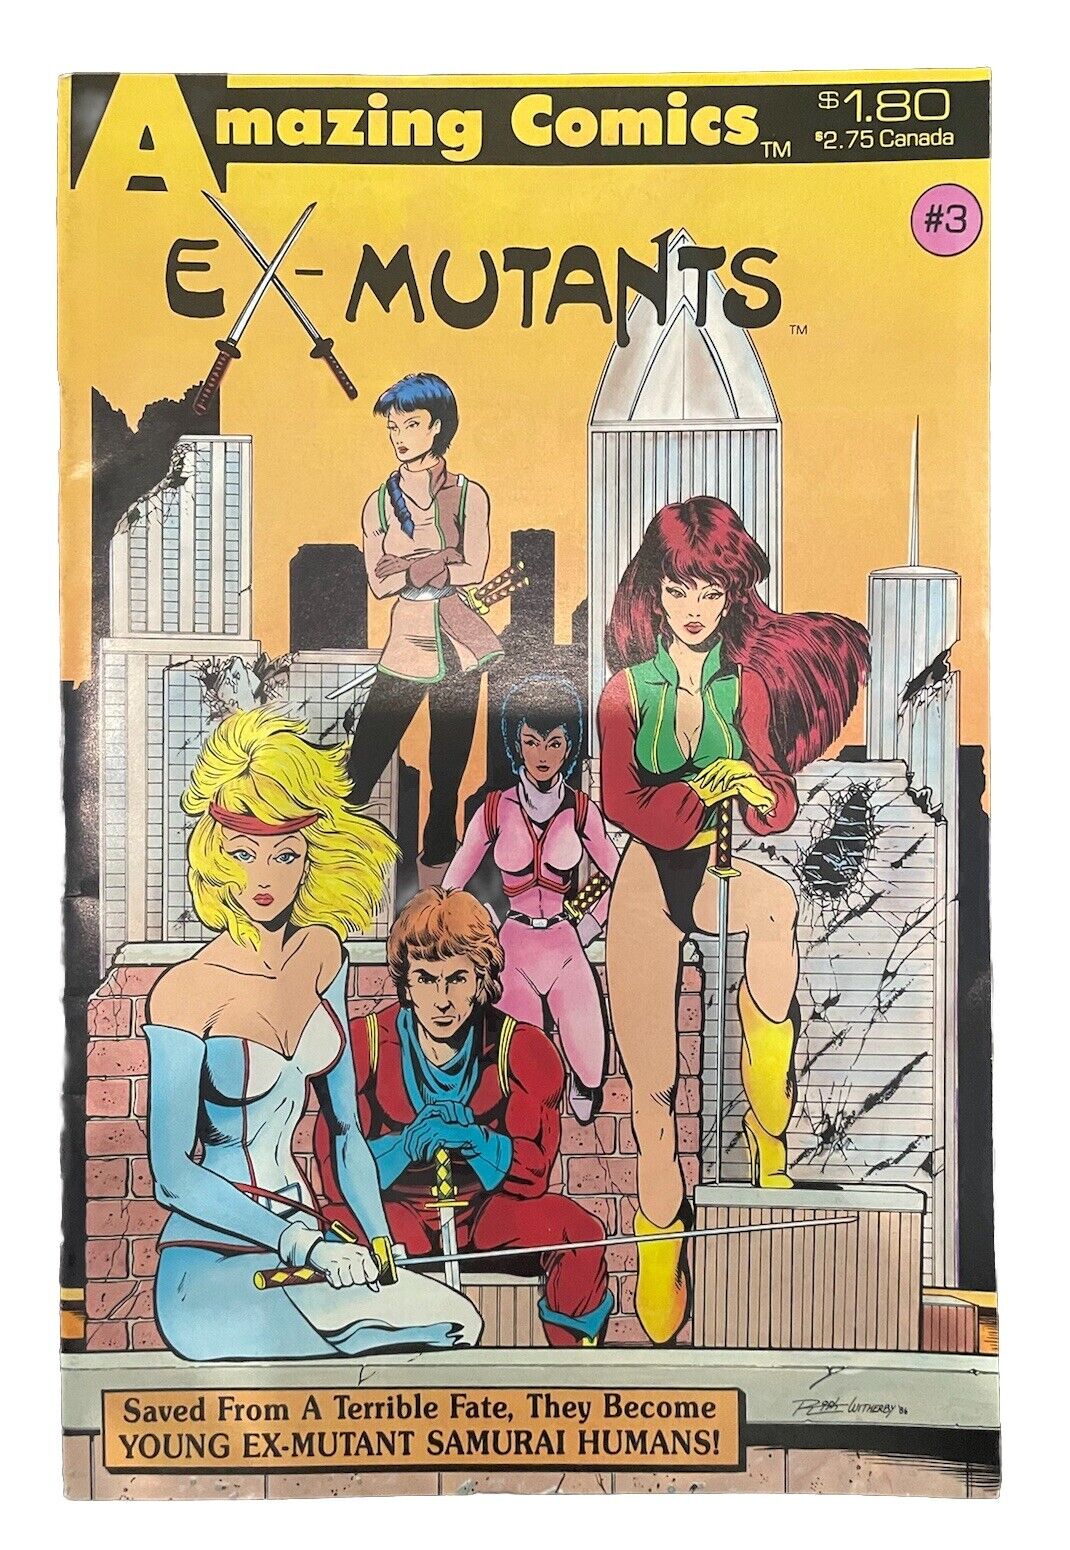 Ex-Mutants Vol. 1 No. 3 1987 Amazing Comics Lim & Witherby